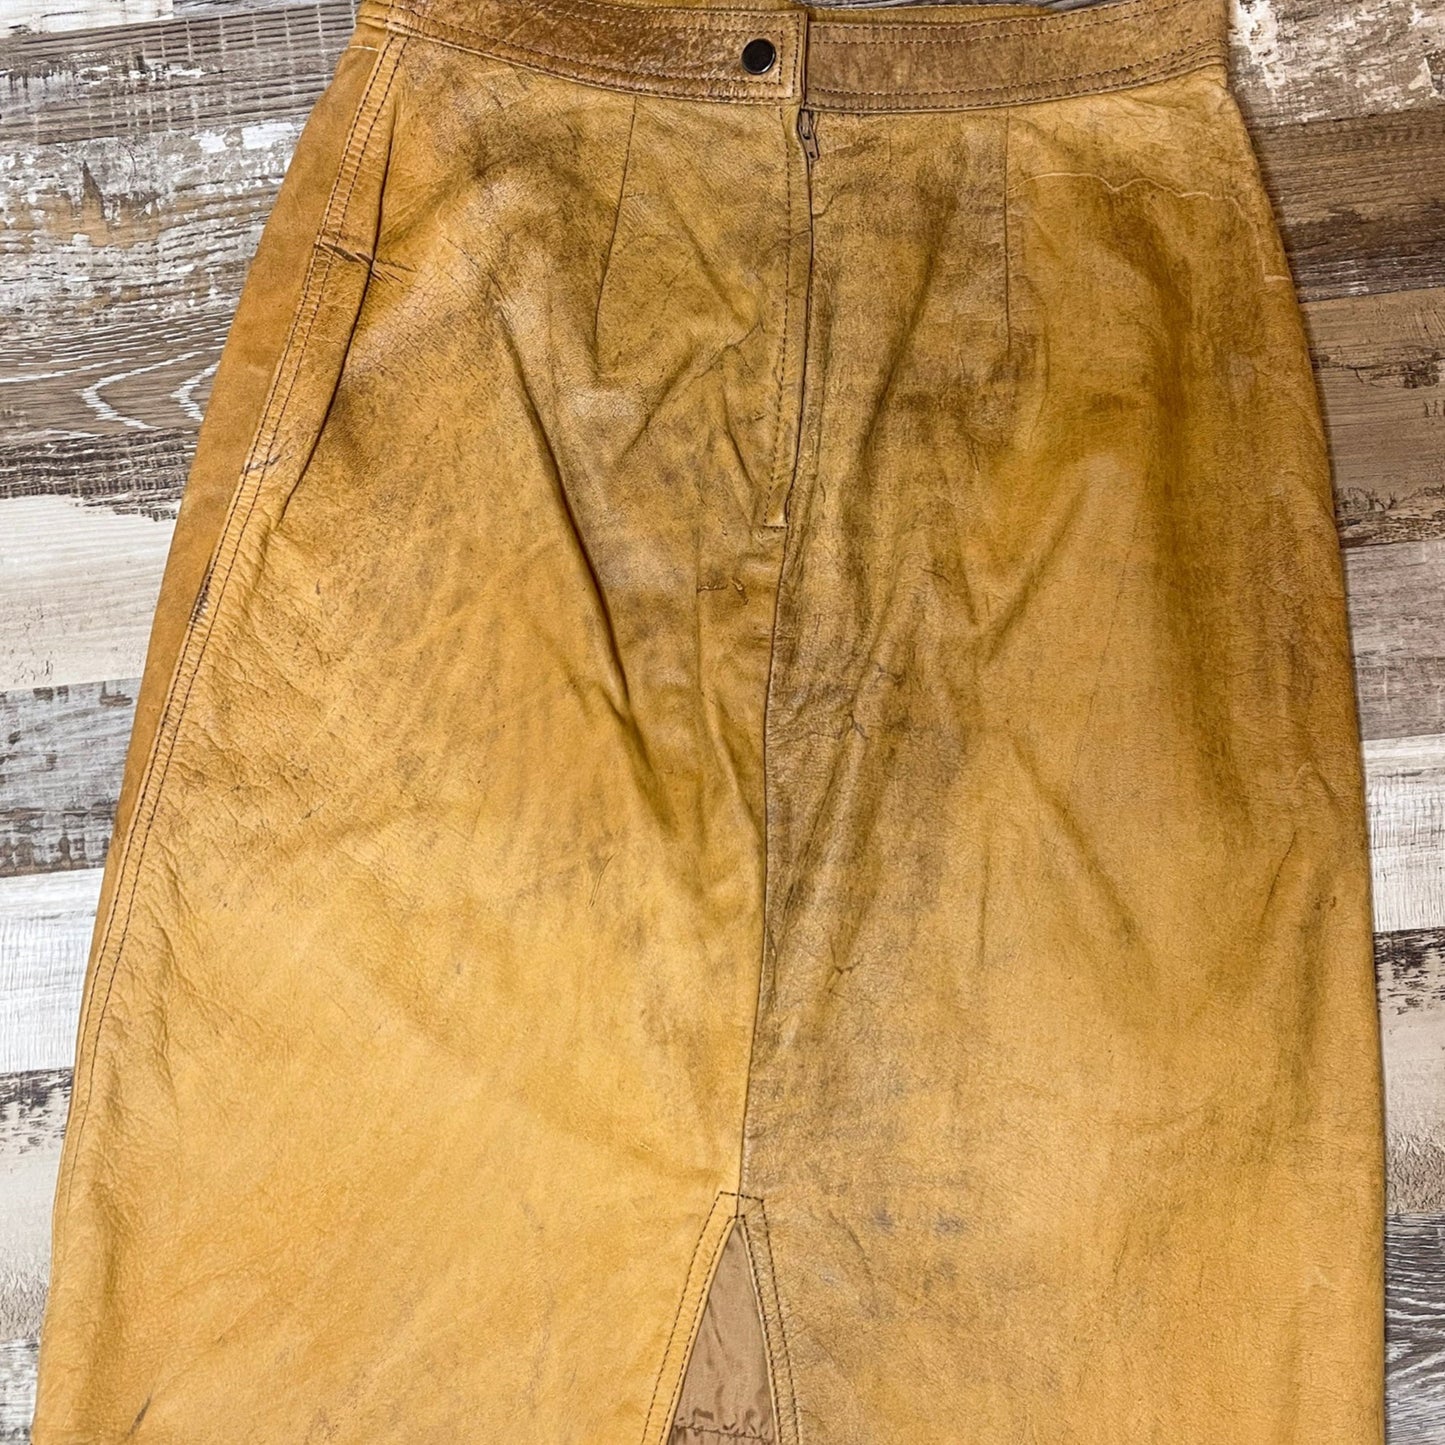 Brown Leather Midi Skirt